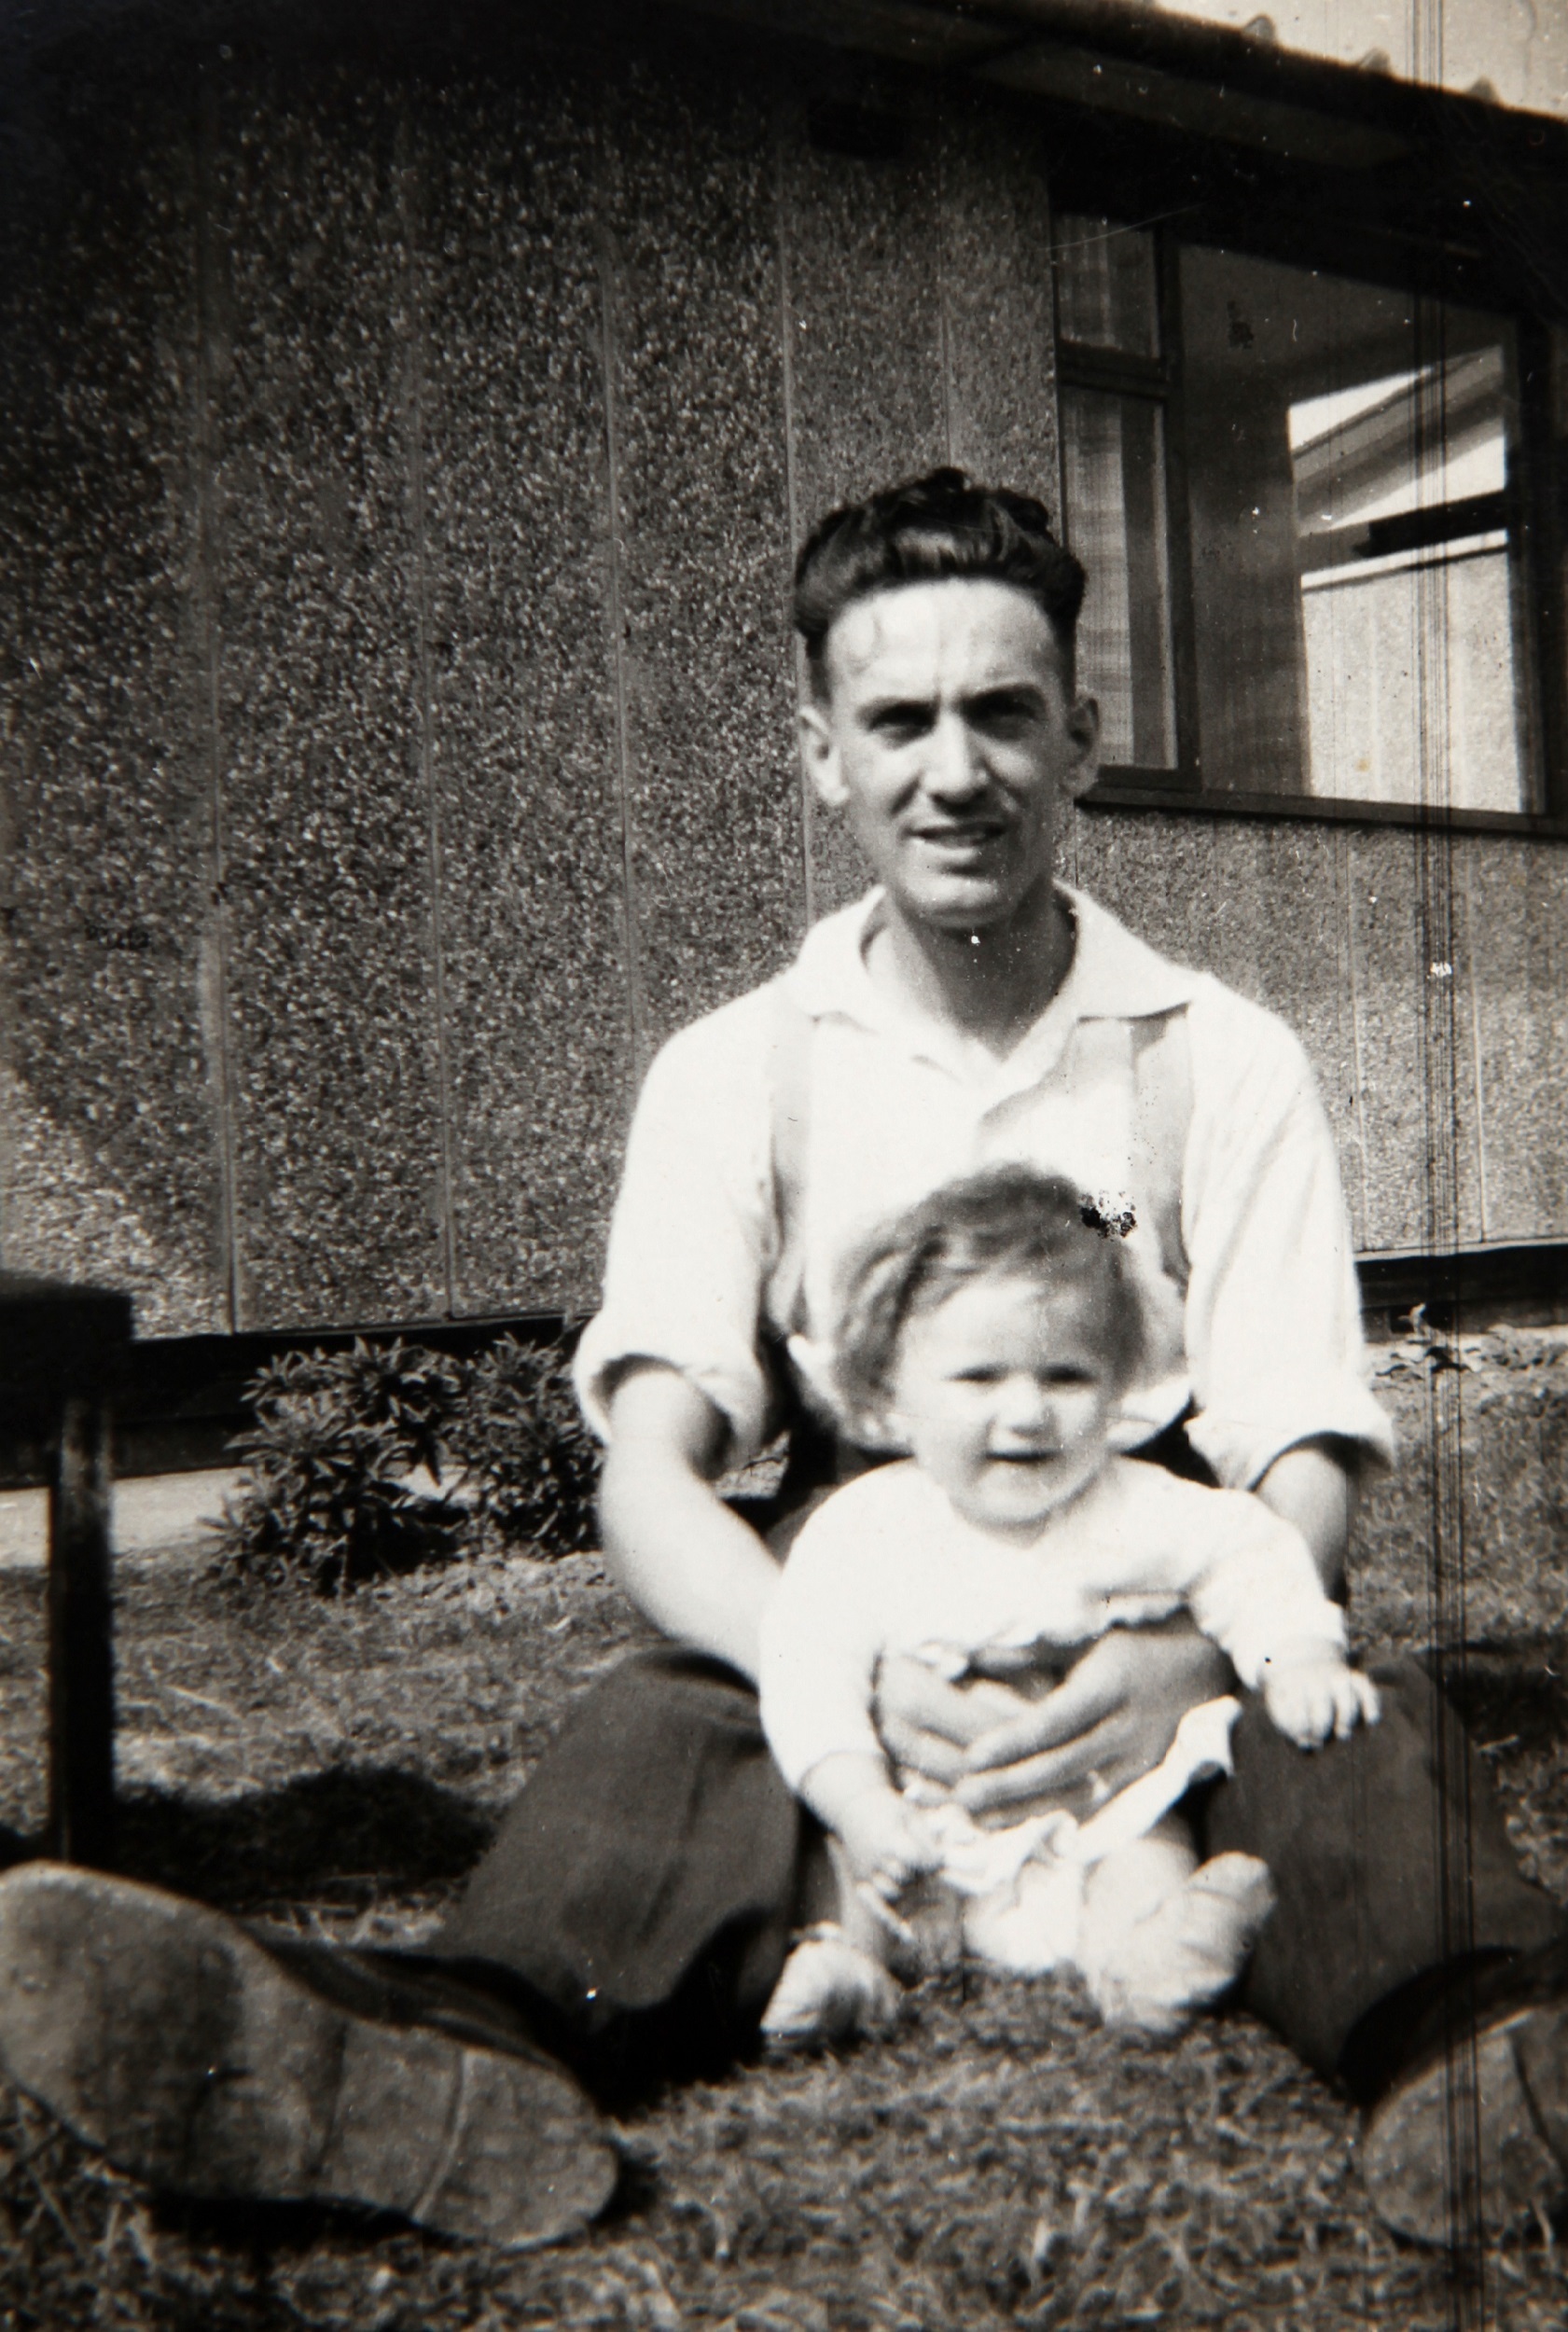 Dad with baby outside Tarran prefab. Bolsover, Derbyshire